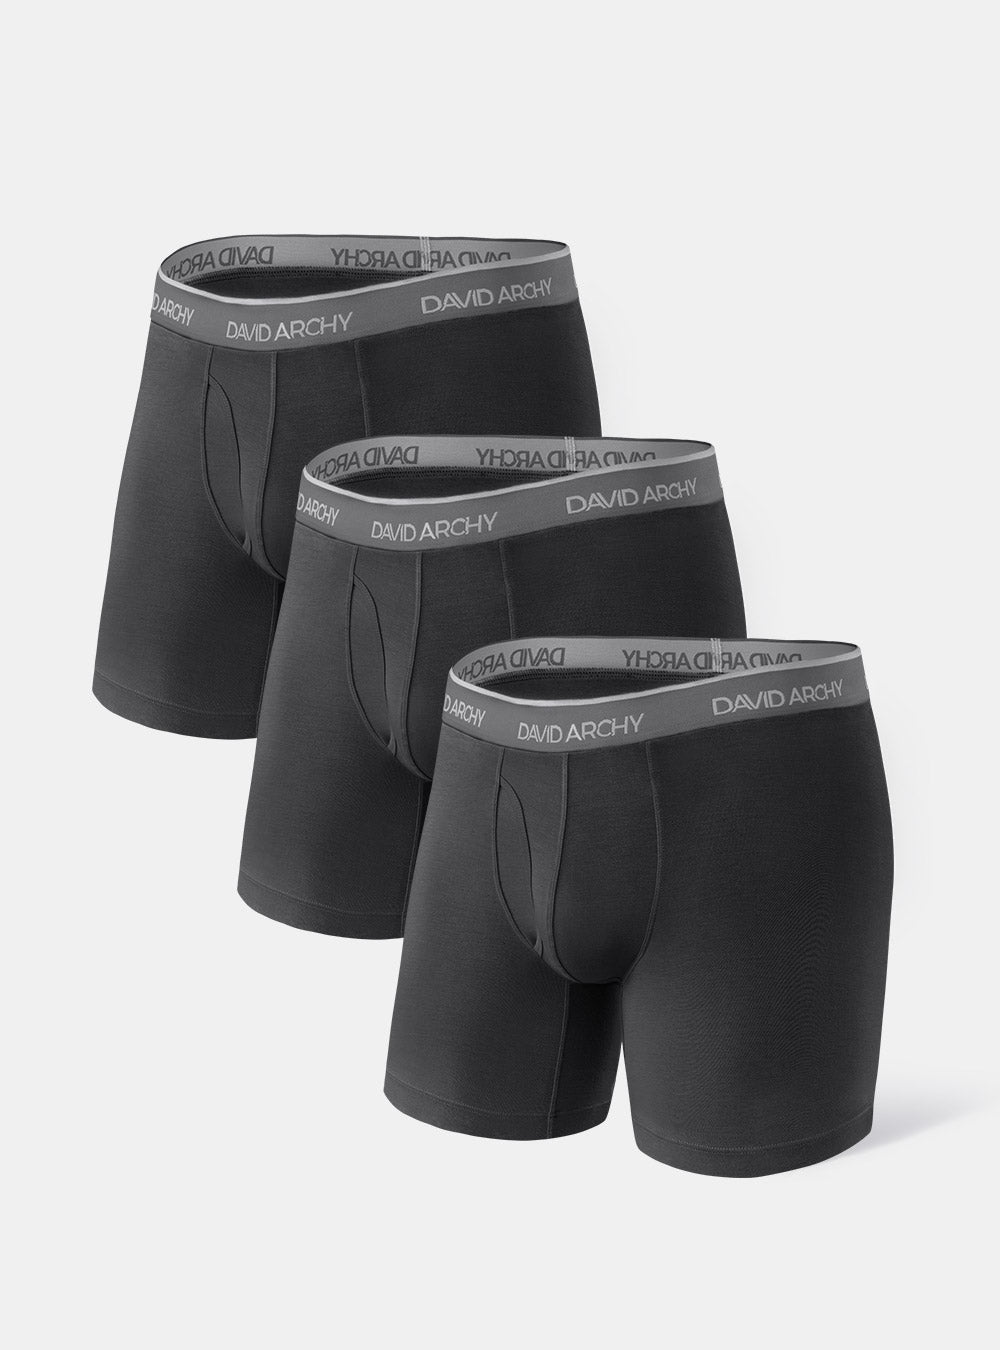 David Archy 3 Packs Super Soft Cotton Boxer Briefs Natural and  Skin-Friendly Men's Underwear